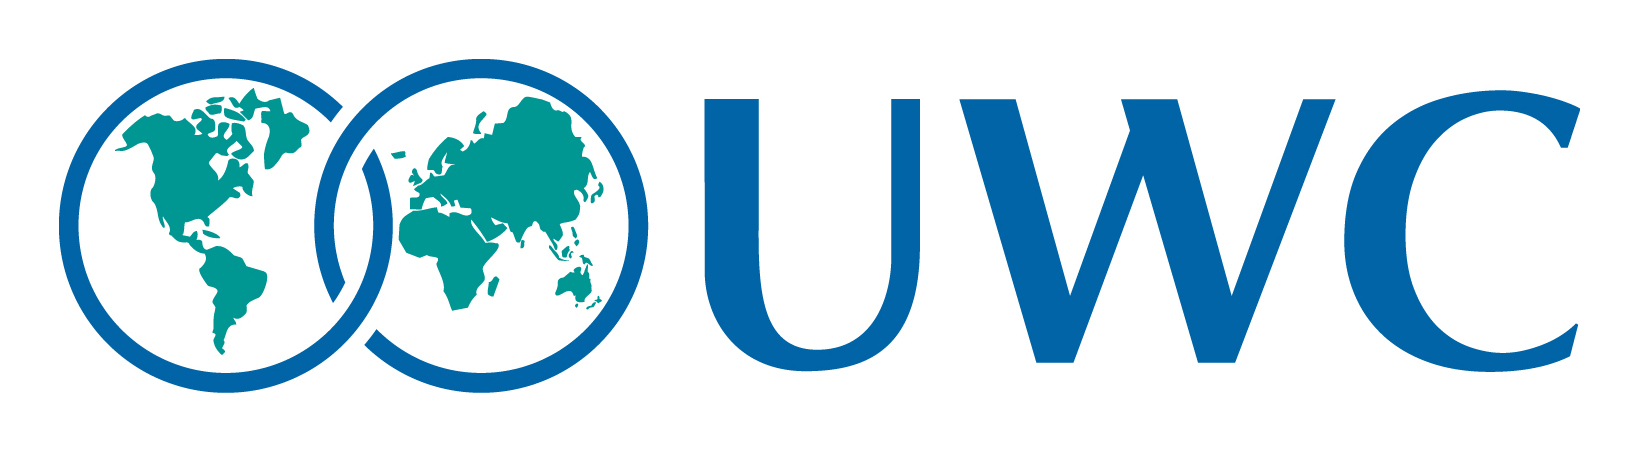 United World Colleges logo